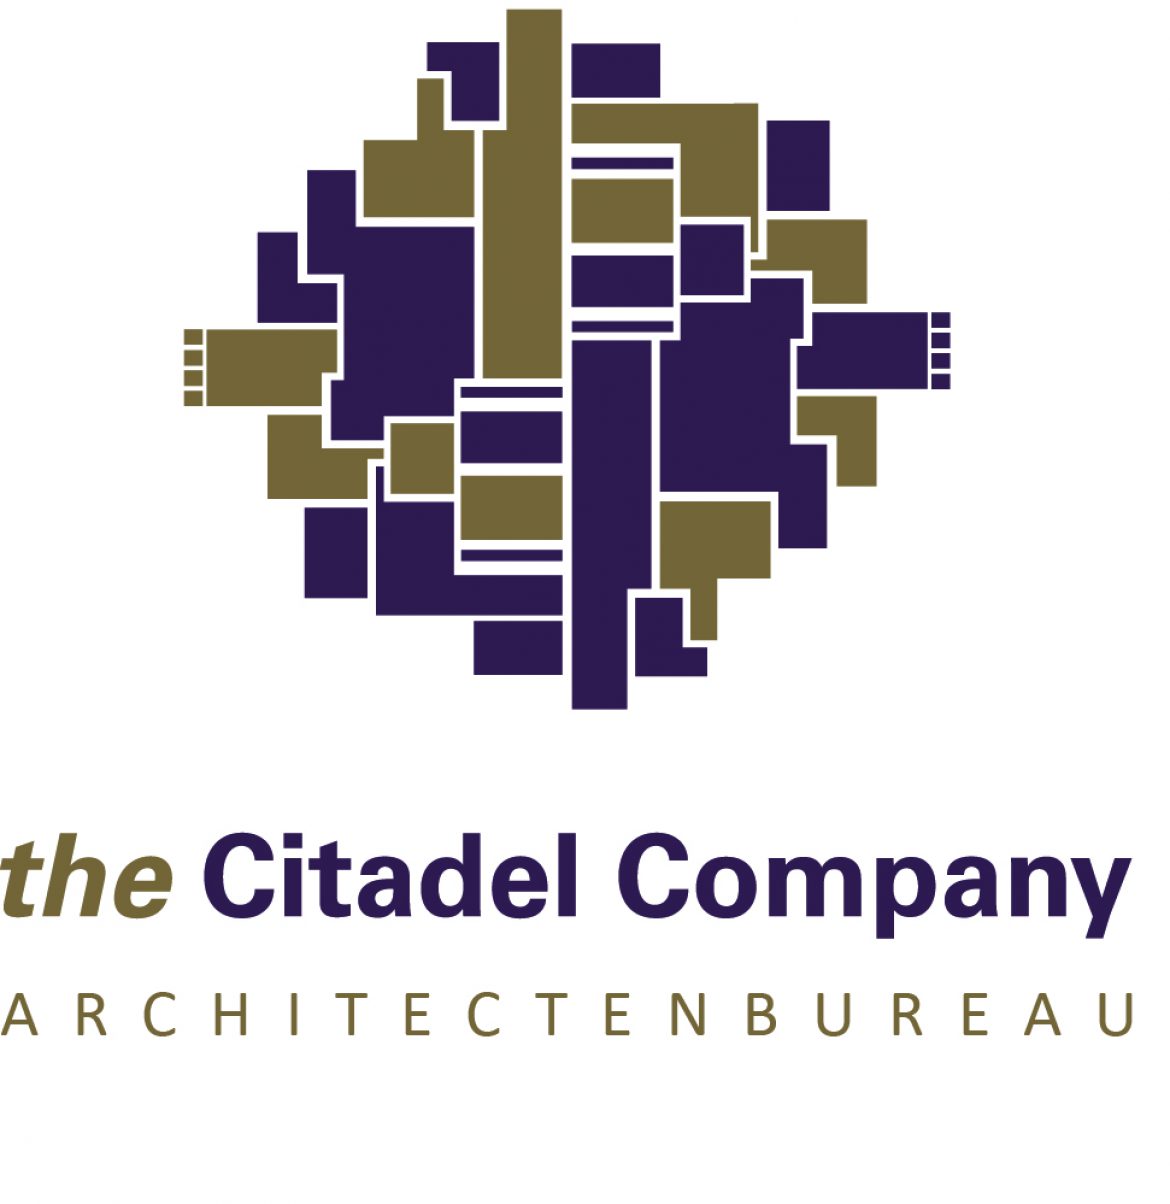 The Citadel Company